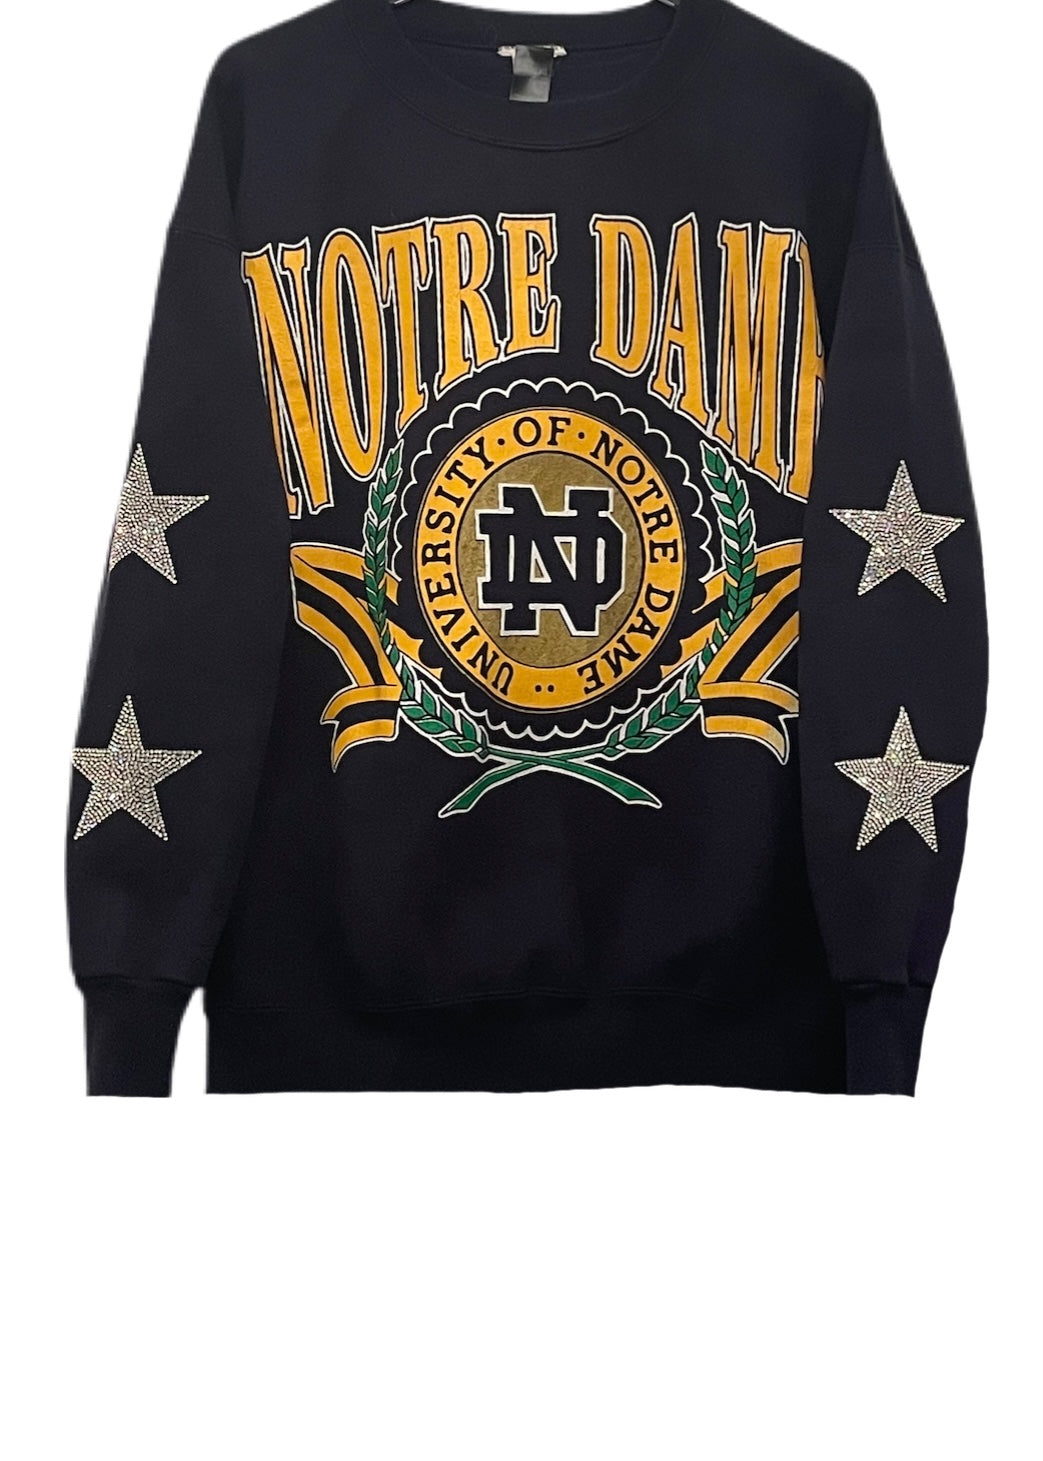 Notre Dame University, One of a KIND Vintage Sweatshirt with Crystal Star Design